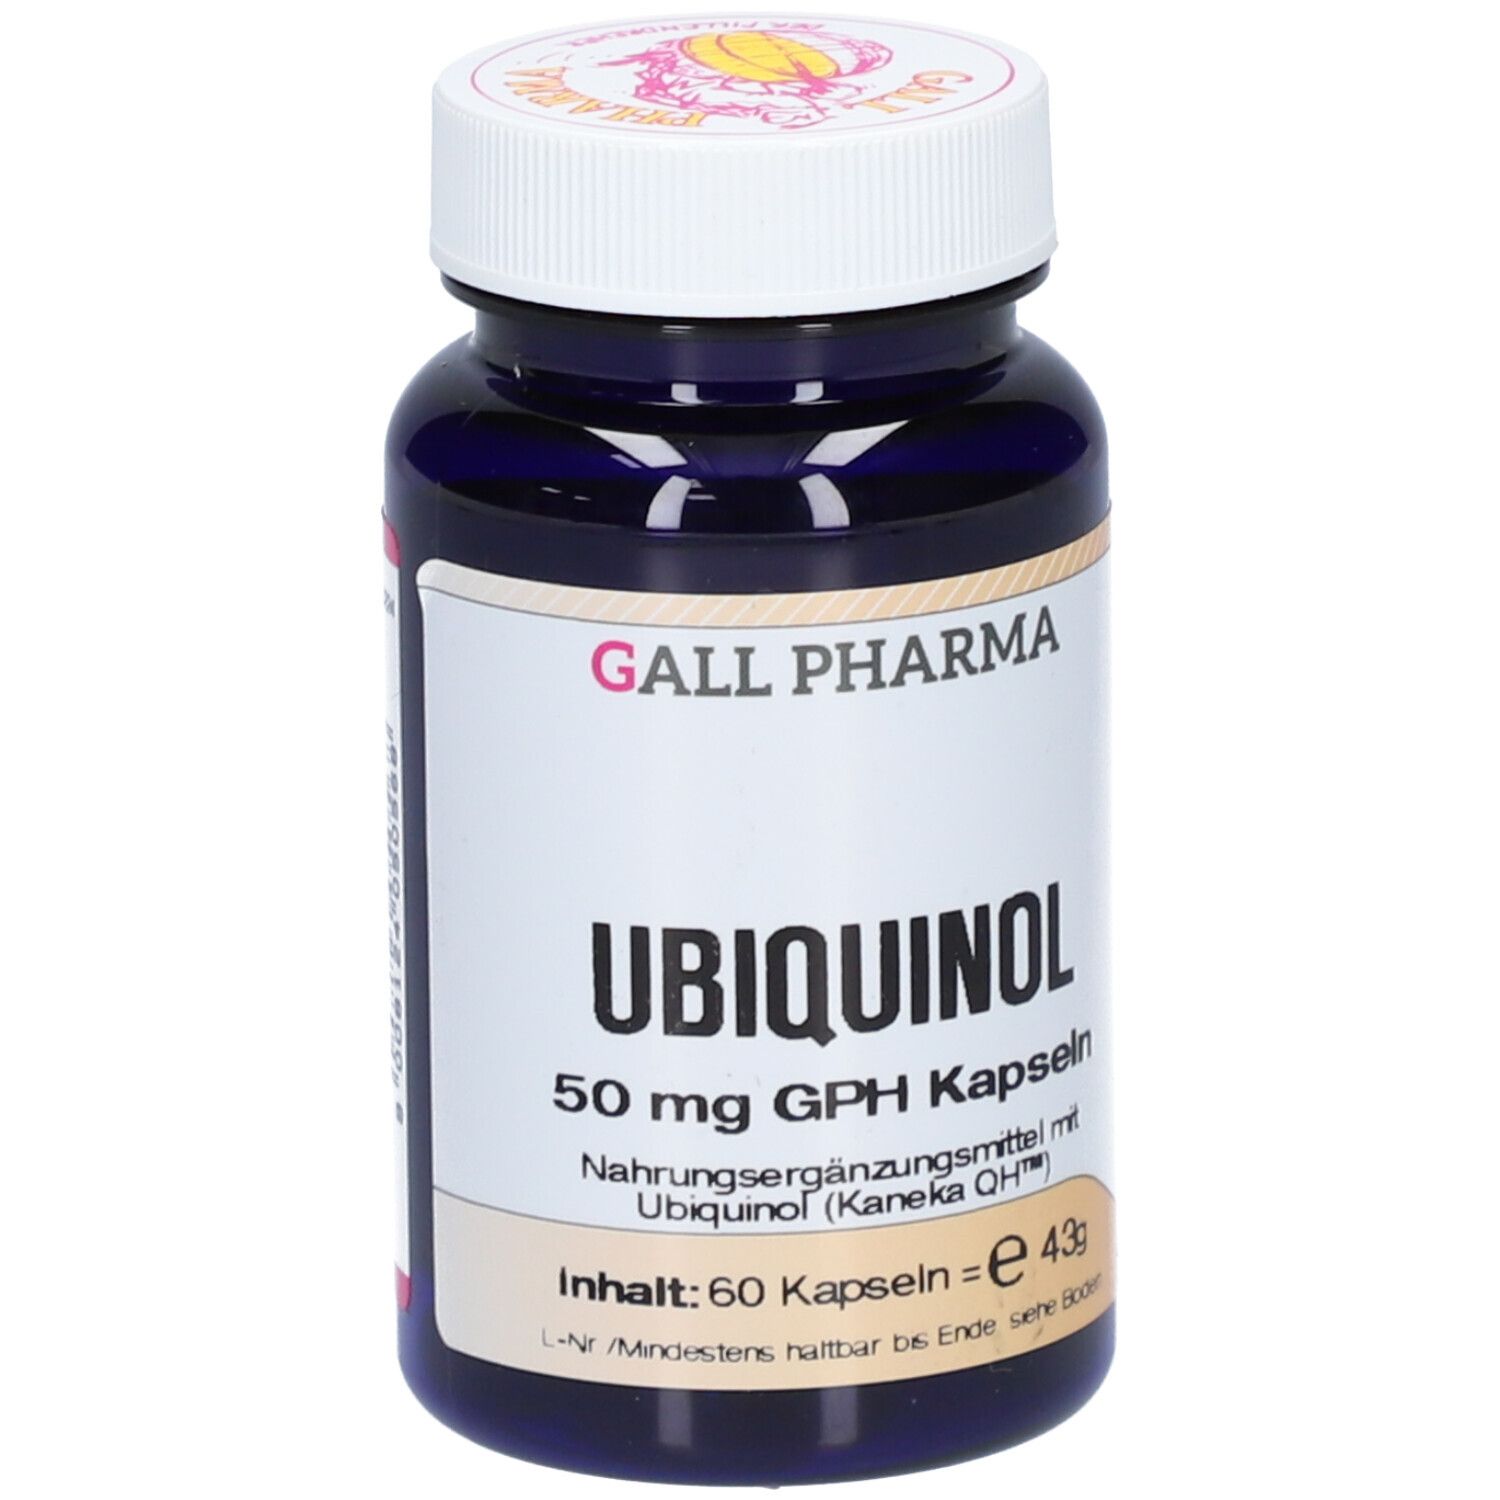 GALL PHARMA UBIQUINOL 50 mg GPH Kapseln